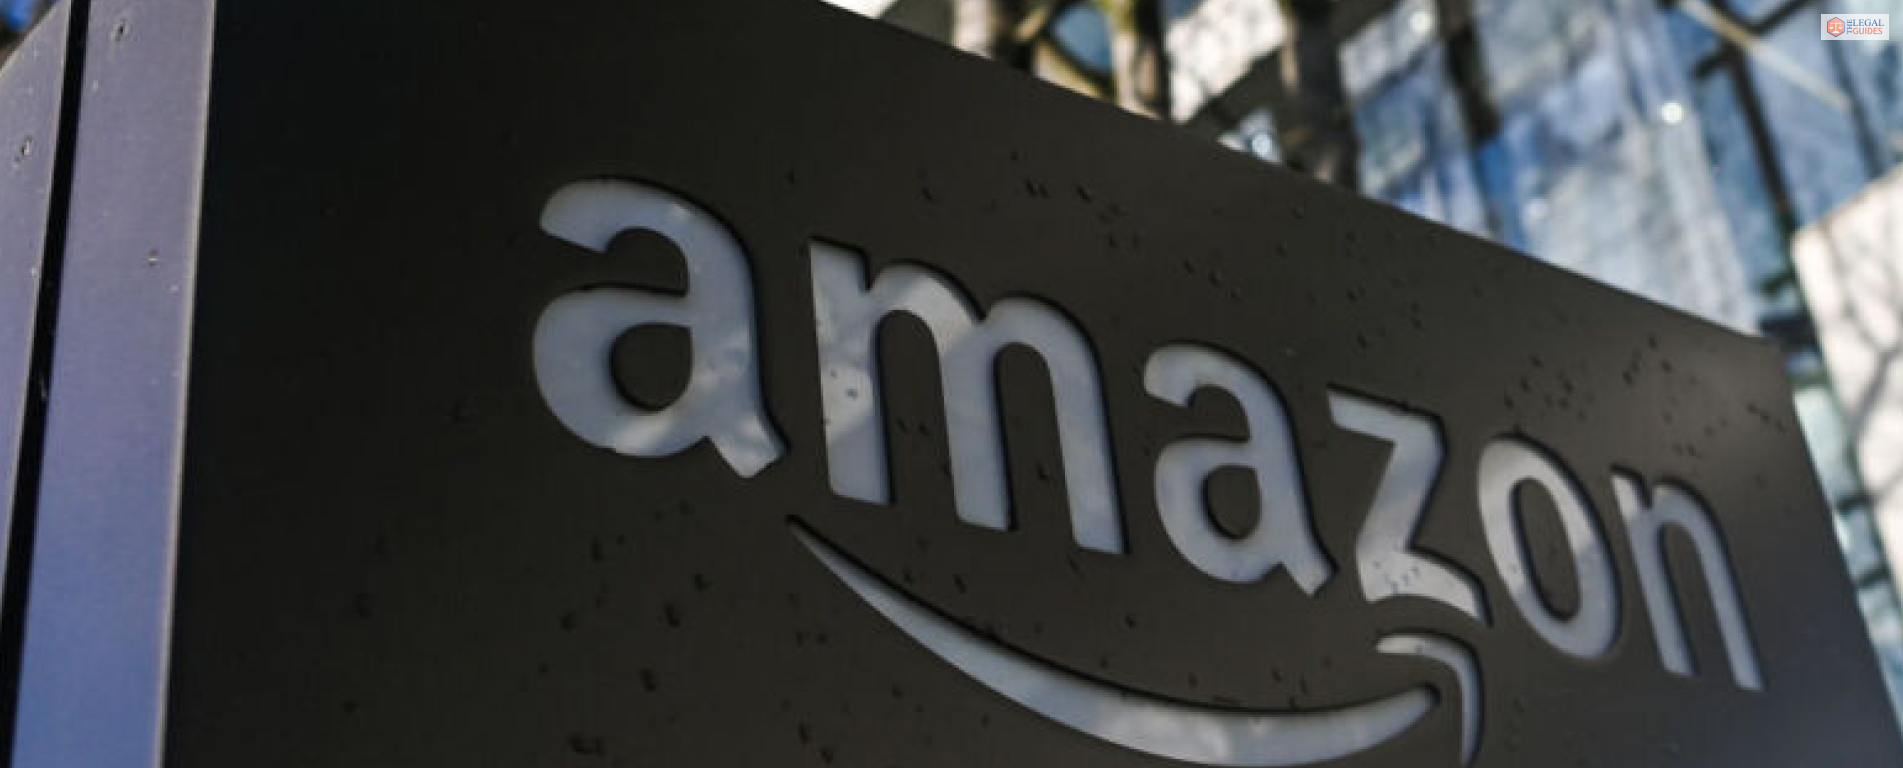 Zulily Takes Legal Action Against Amazon, Alleging Antitrust Tactics